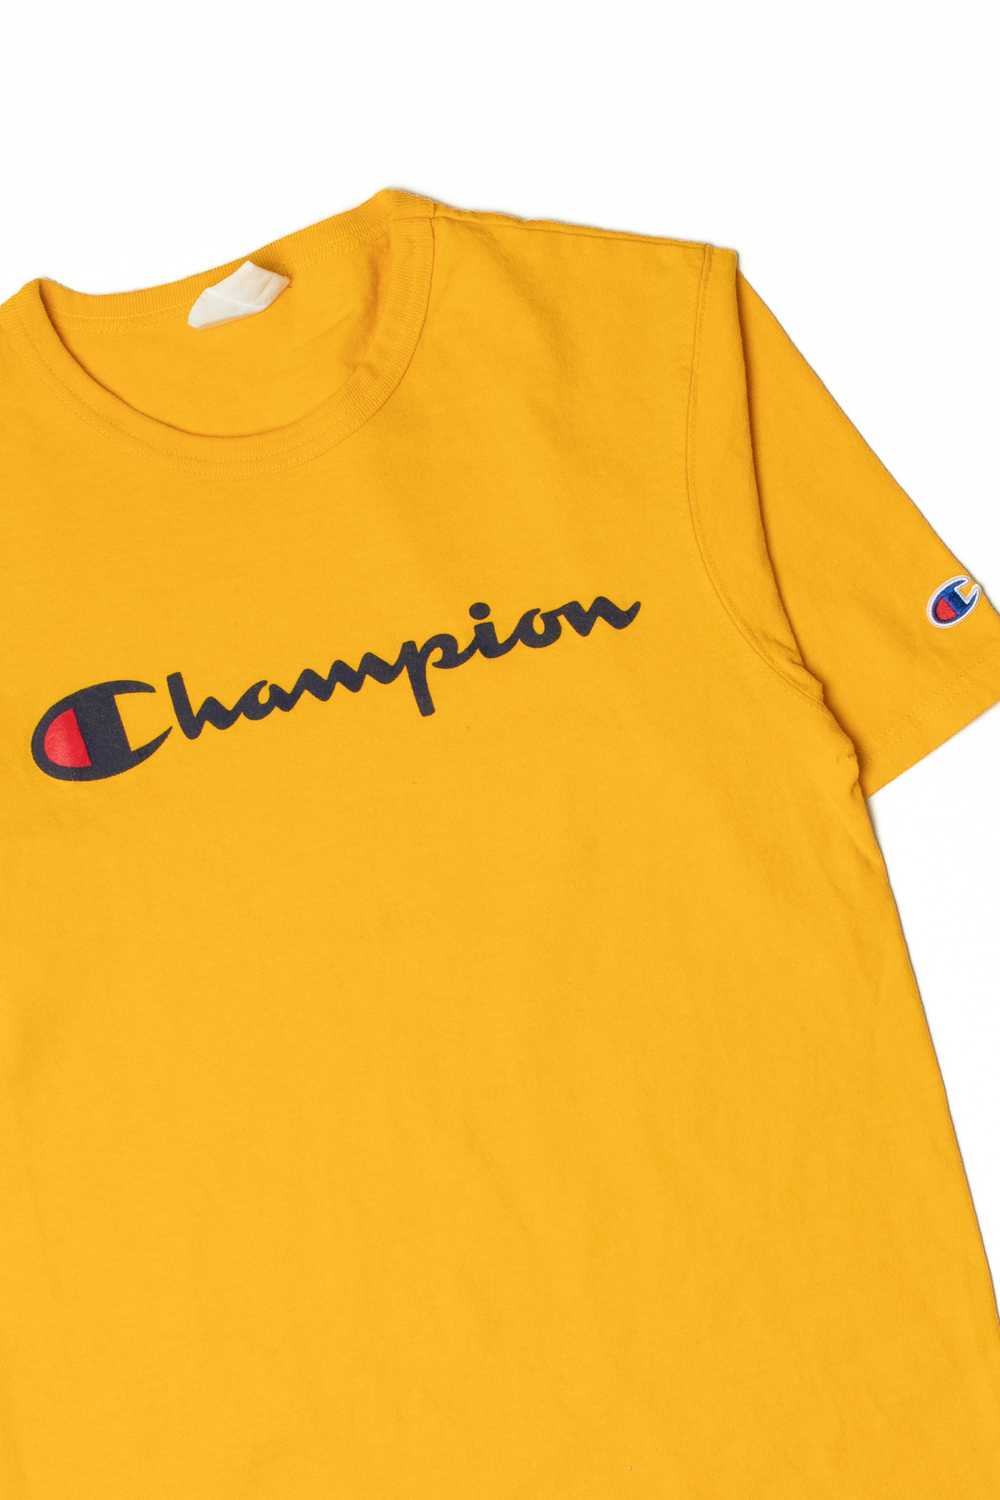 Vintage Champion T-Shirt (1990s) 8629 - image 2